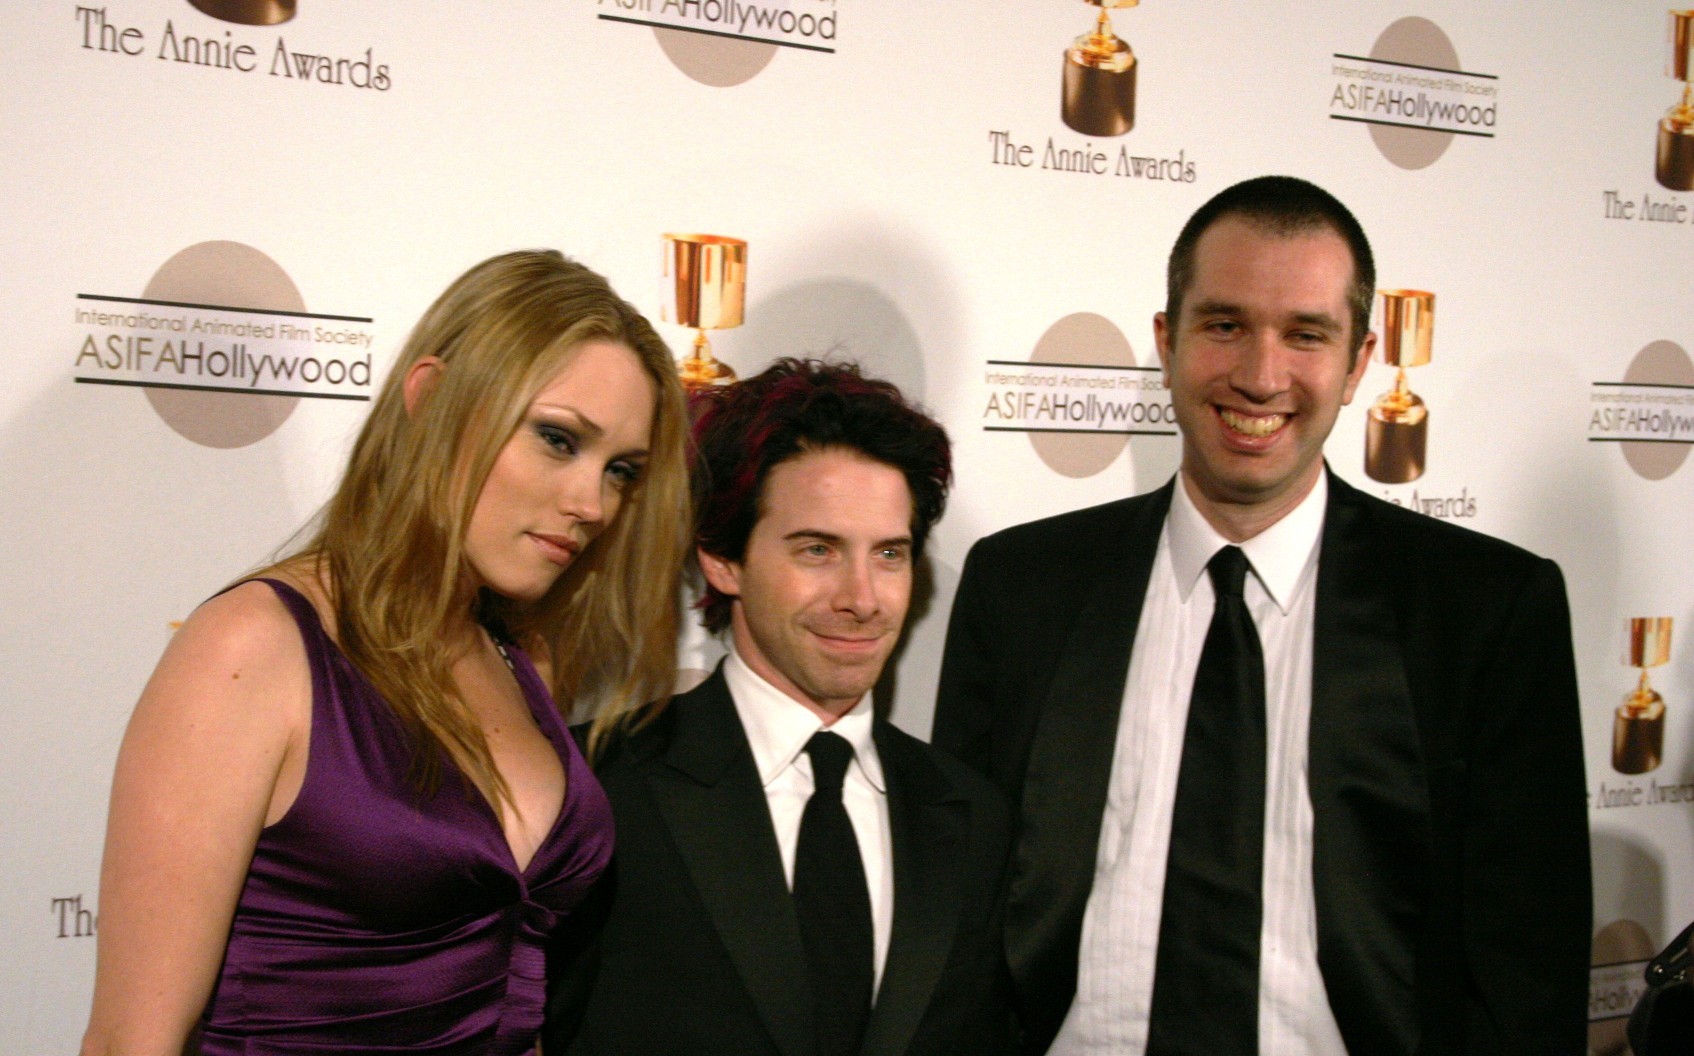 Robot Chicken creators Seth Green and Matt Senreich, with Clare Grant